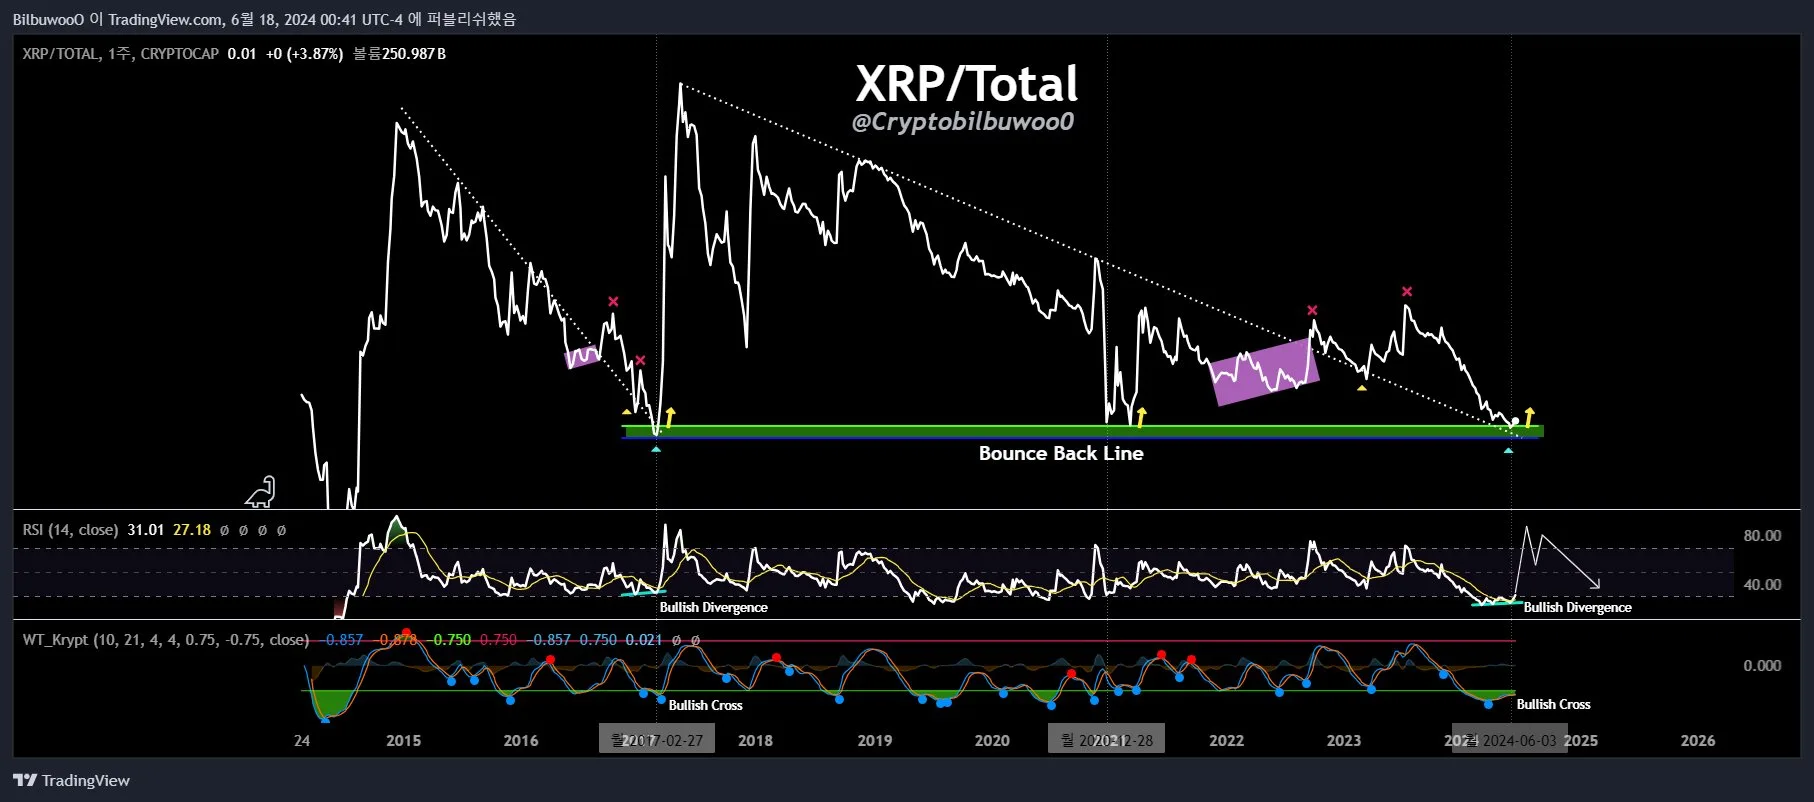 XRP price analysis